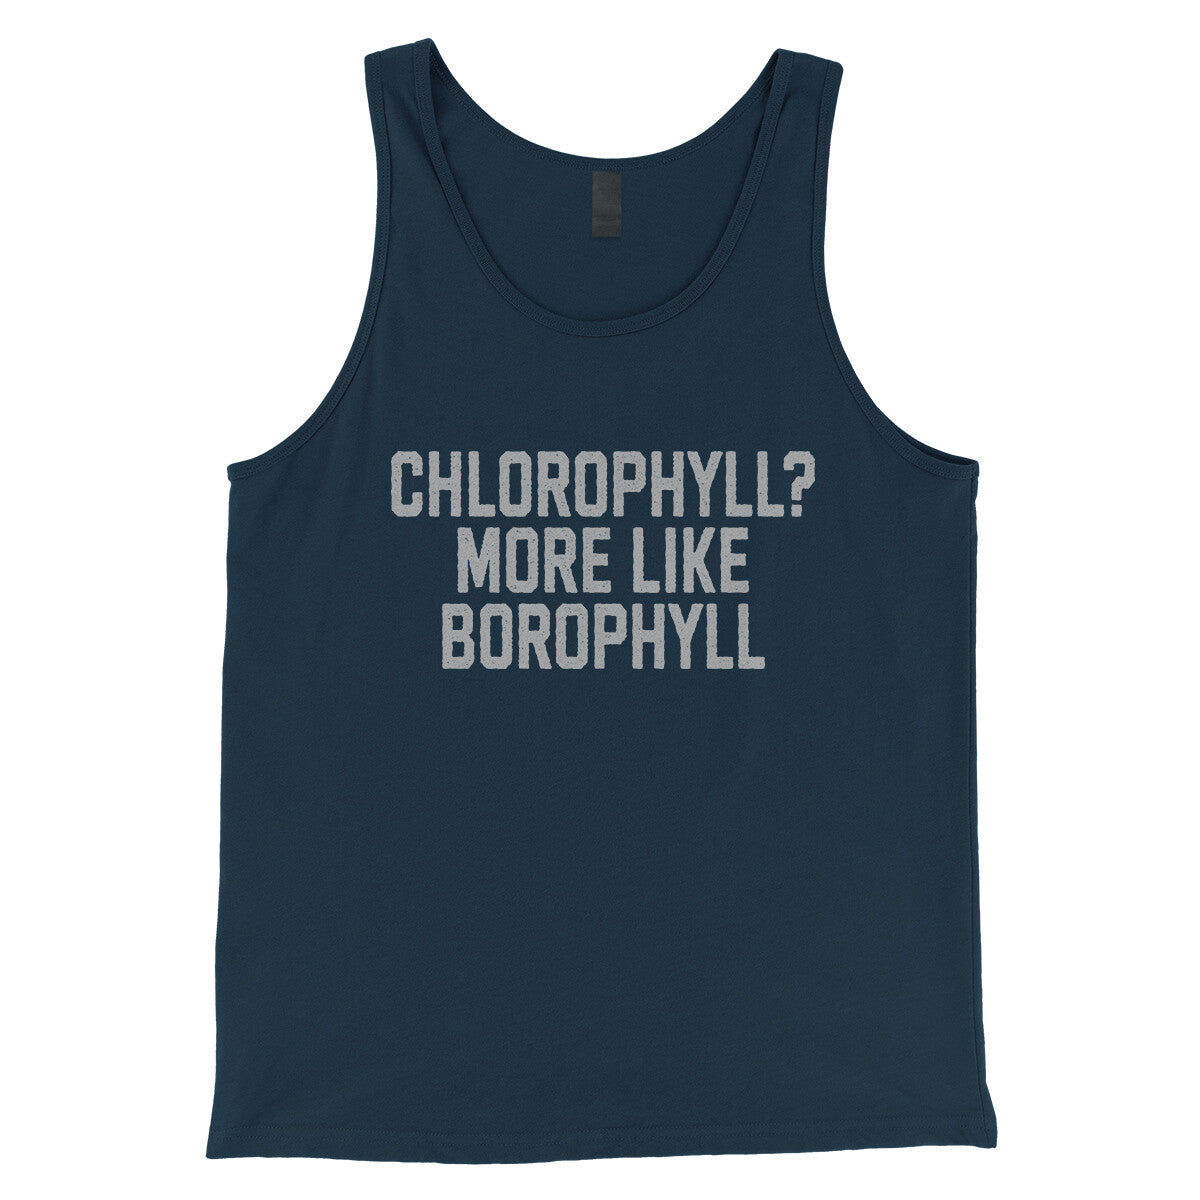 Chlorophyll More Like Borophyll in Navy Color